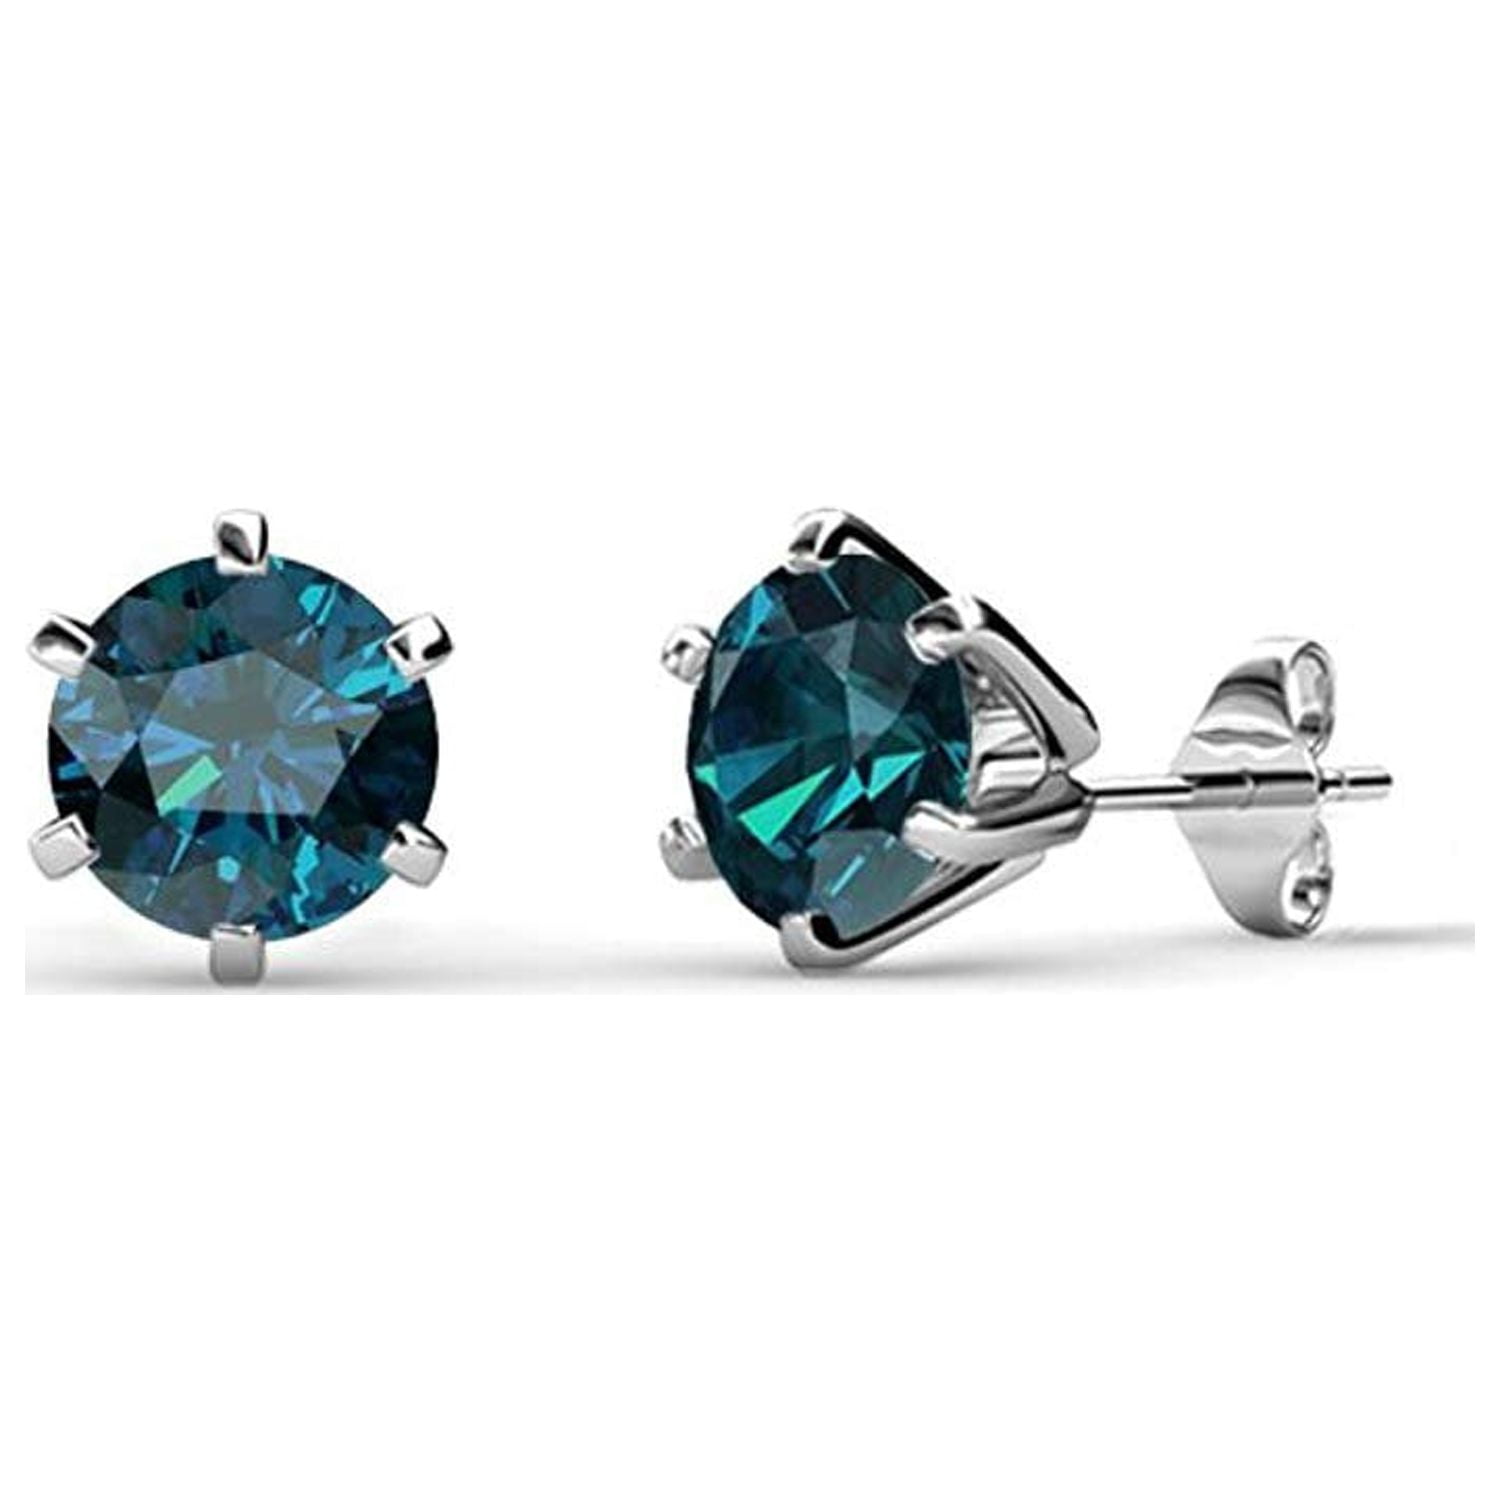 Buy Blue Diamond Stud Earrings 1.92 Carat 14K Yellow Gold Gallery Design  Handmade Certified Online in India - Etsy